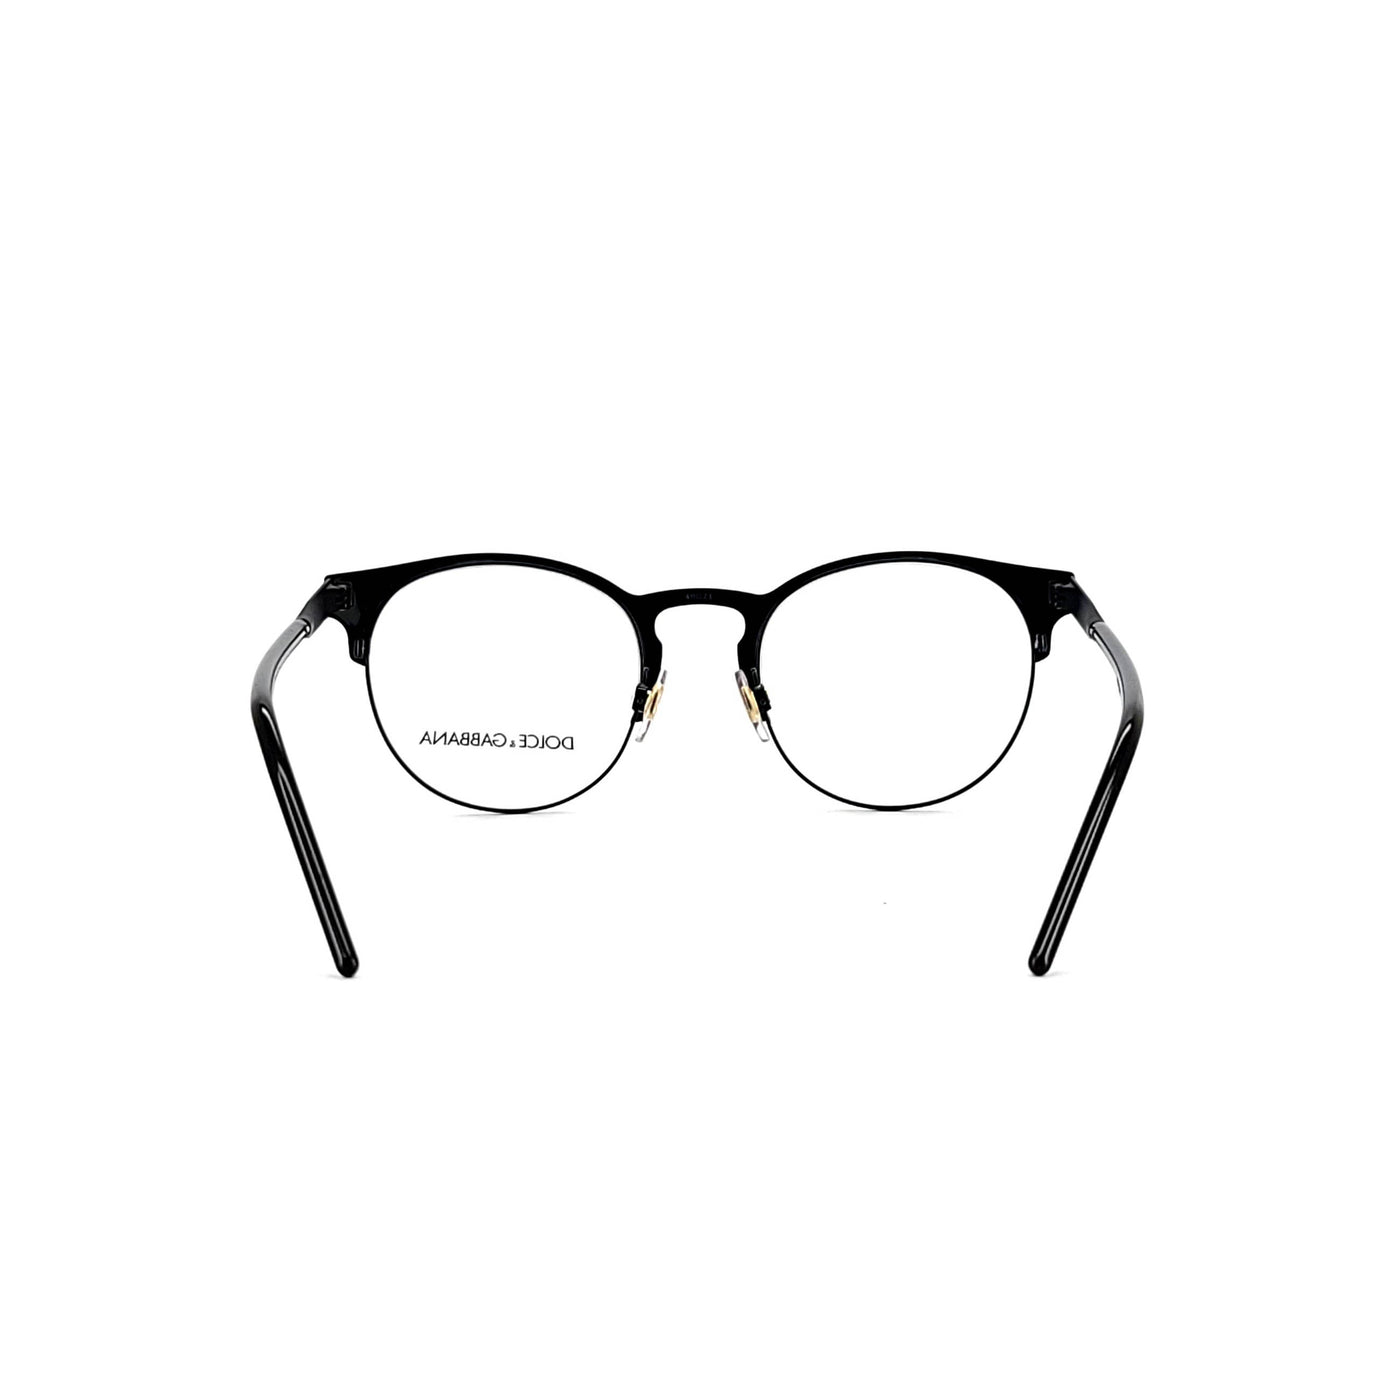 Dolce & Gabbana DG1331/1345 | Eyeglasses - Vision Express Optical Philippines